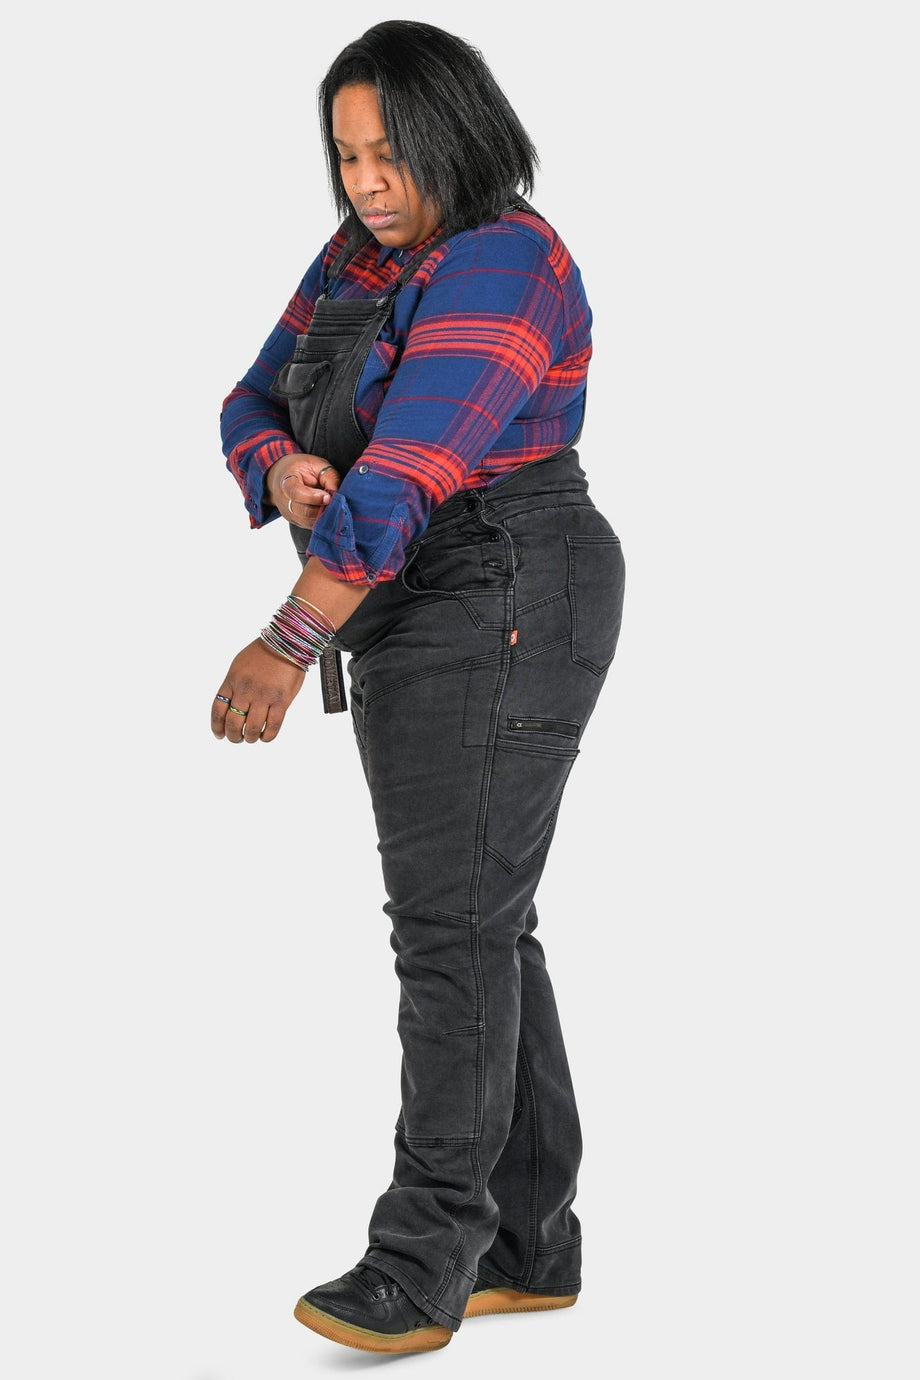 cllios Prime Deals 2024 Bib Overalls for Men Denim Regular Fit Outdoor Work  Washed Jeans Jumpsuits Stylish Pocket Ripped Overalls - Walmart.com